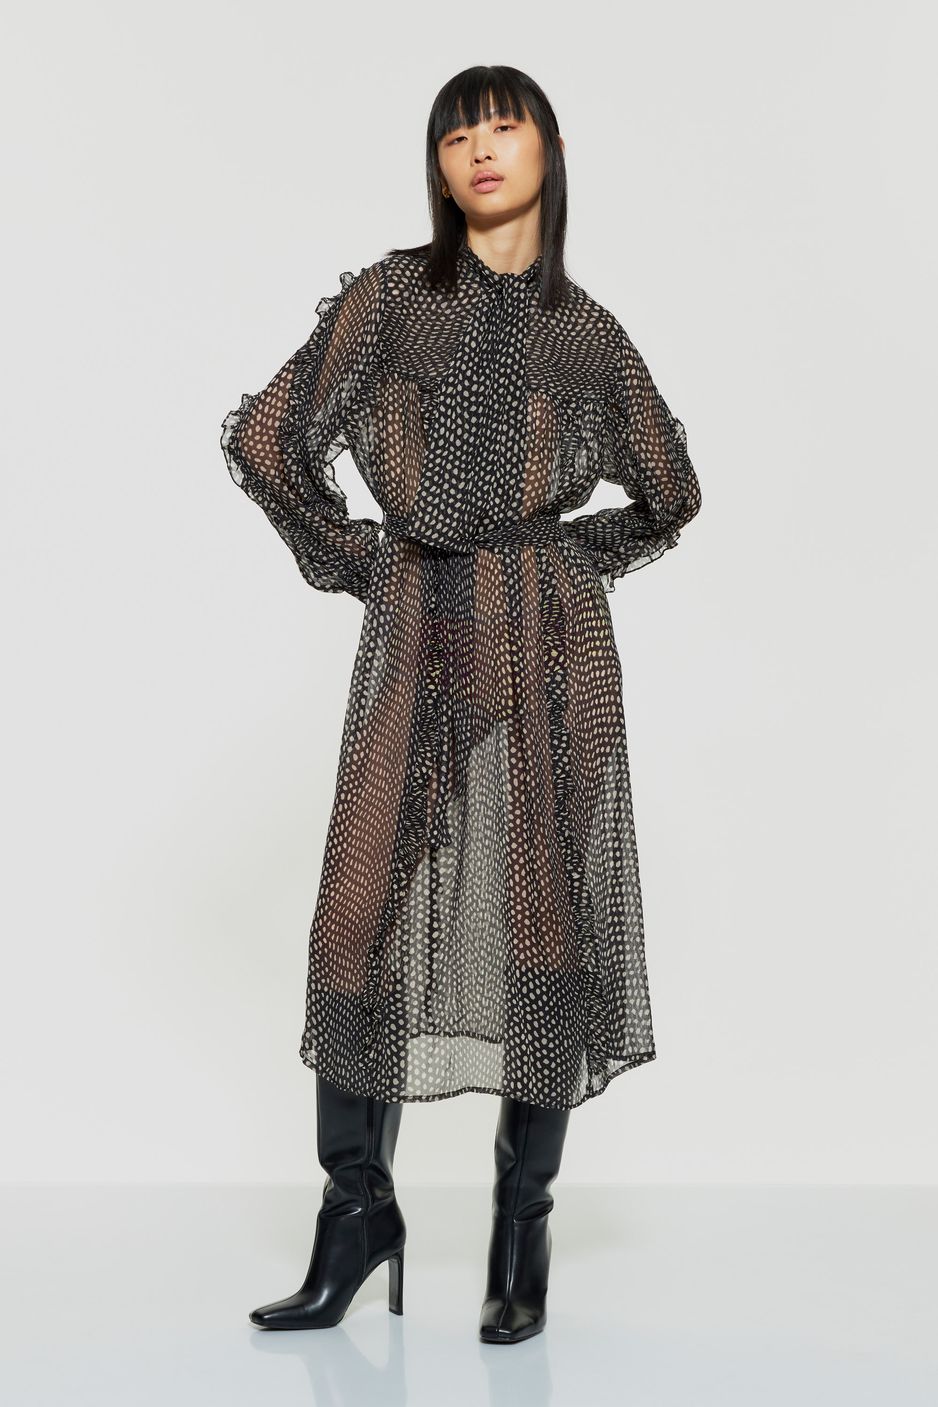 Autumn-Winter Dresses - New collection | ANTIK BATIK